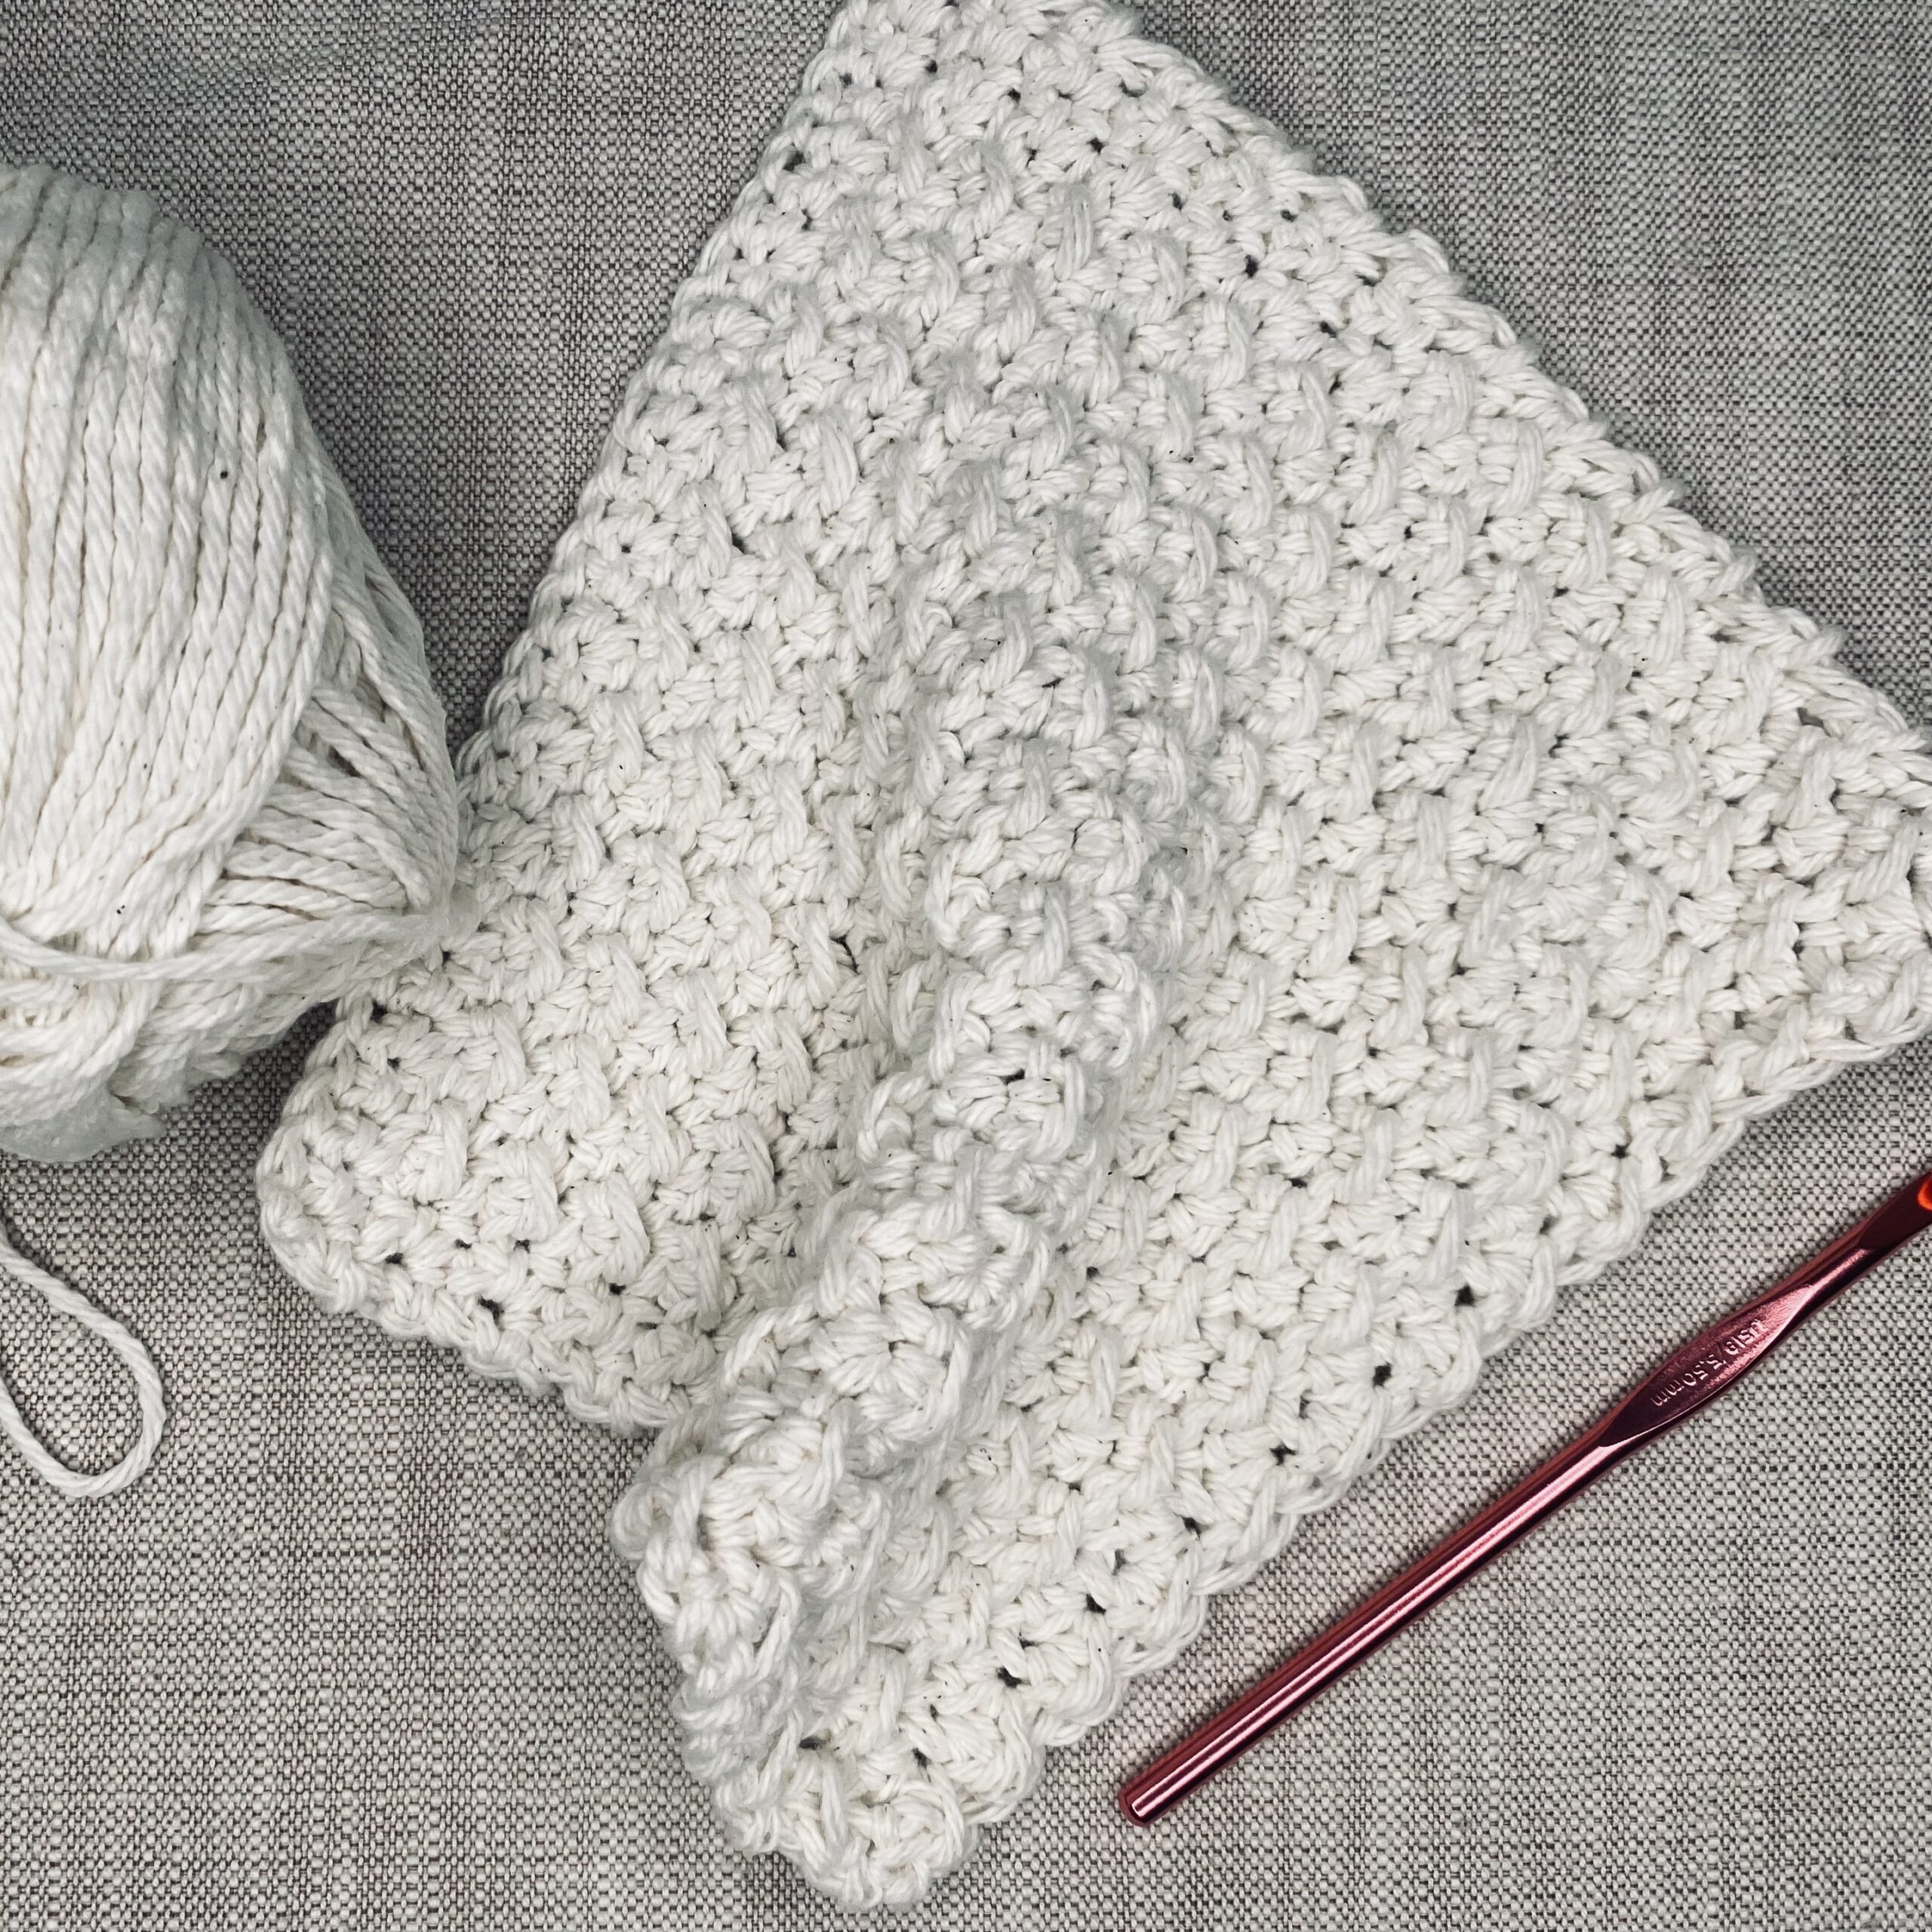 Free Crochet Dishcloth Pattern